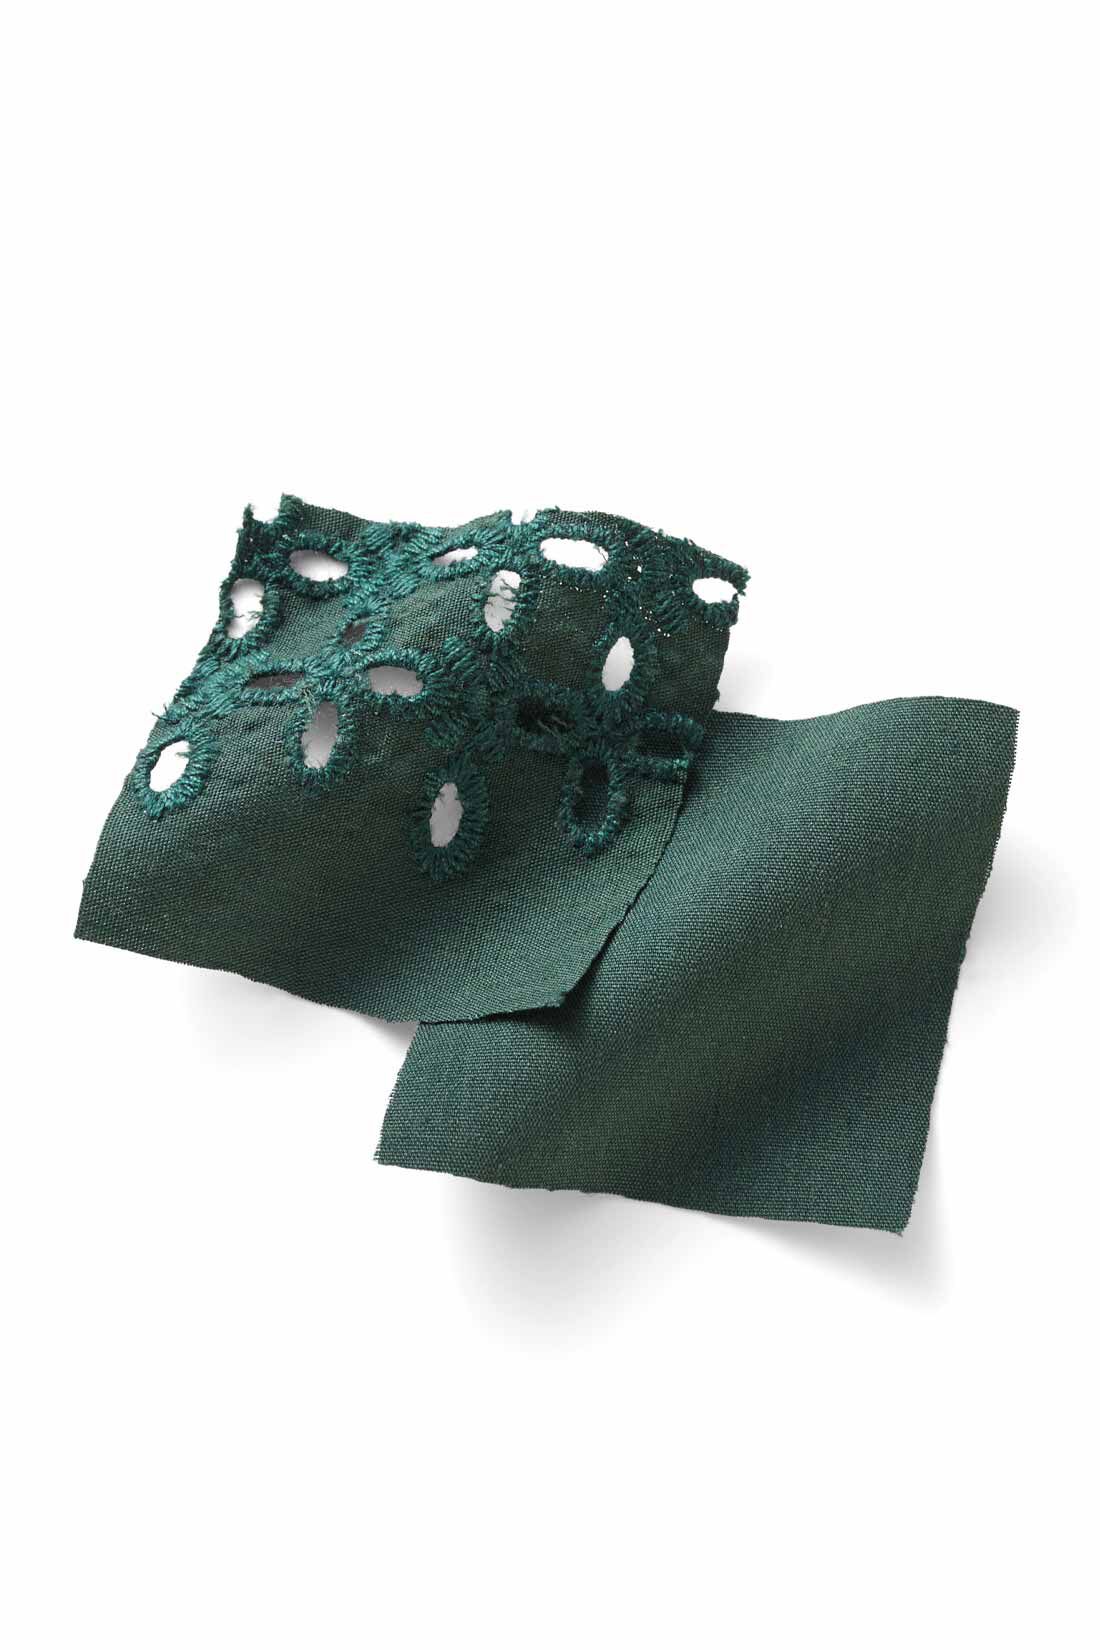 IEDIT|IEDIT[イディット]　アンティーク風デザインの袖レースブラウス〈ブラック〉|張り感のある布はく素材とレトロな表情のエンブロイダリーレースはしわが気になりにくいナチュラルな素材感。　※お届けするカラーとは異なります。